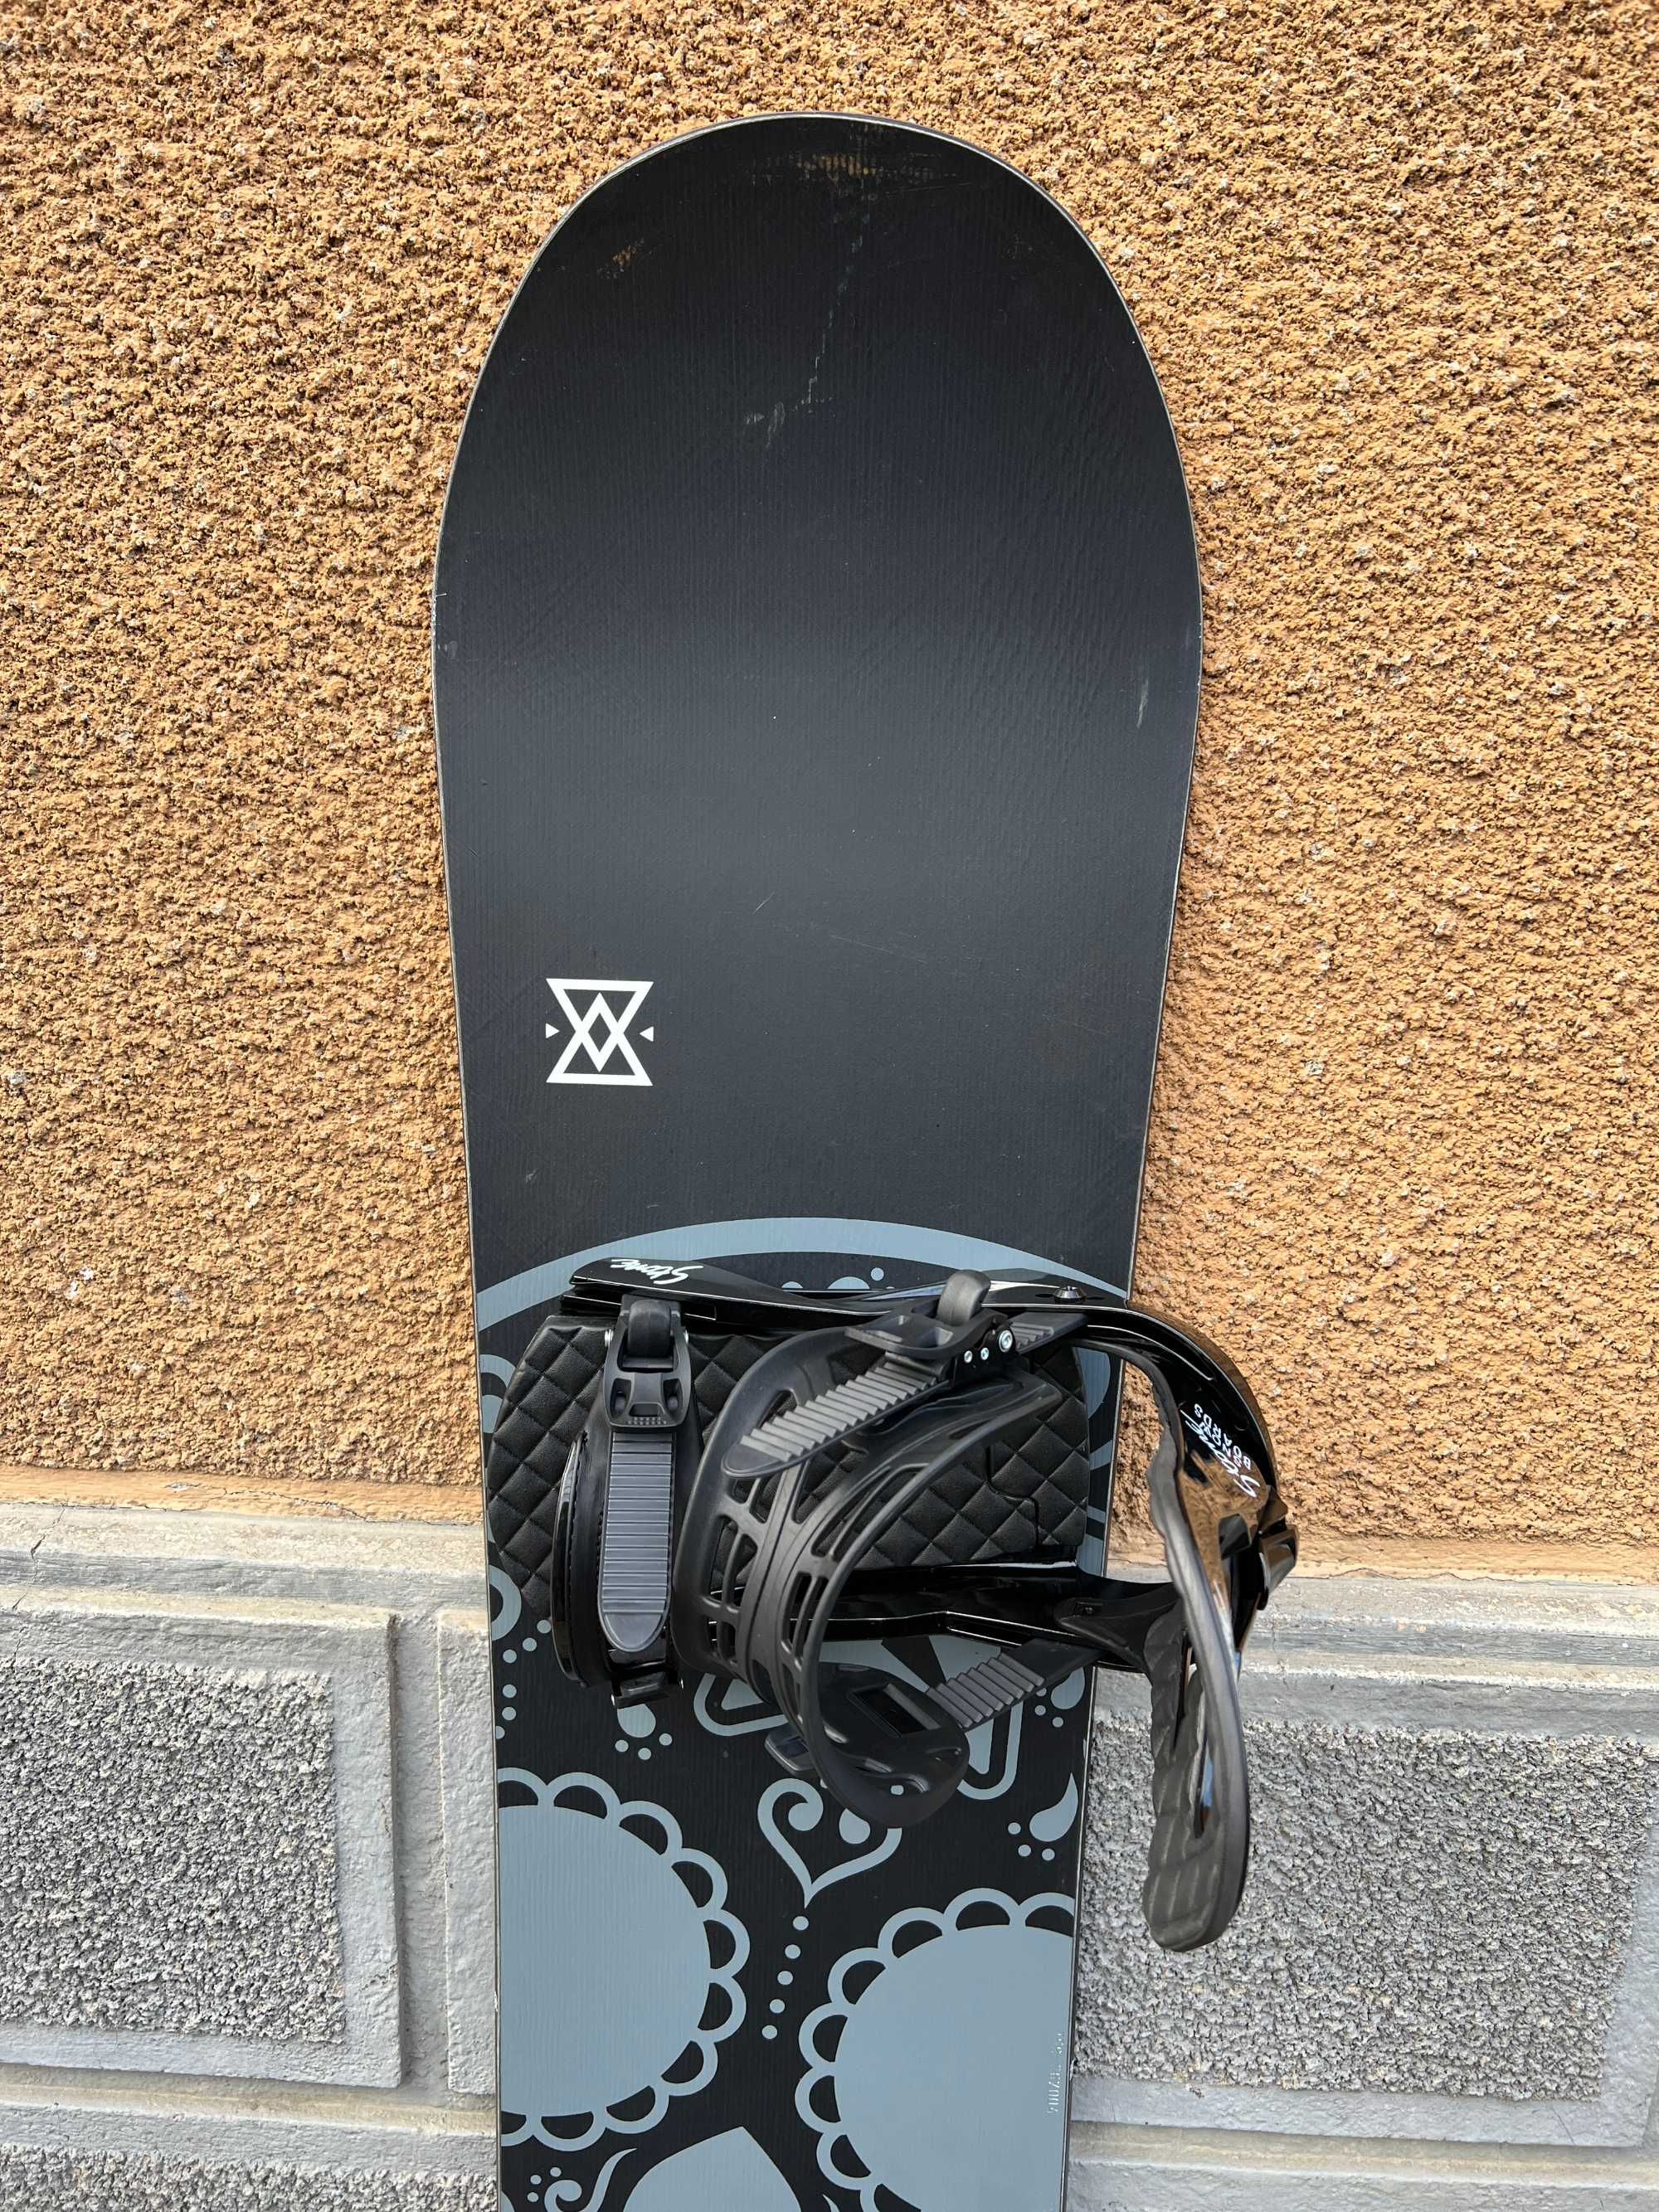 placa noua snowboard easy skull L156